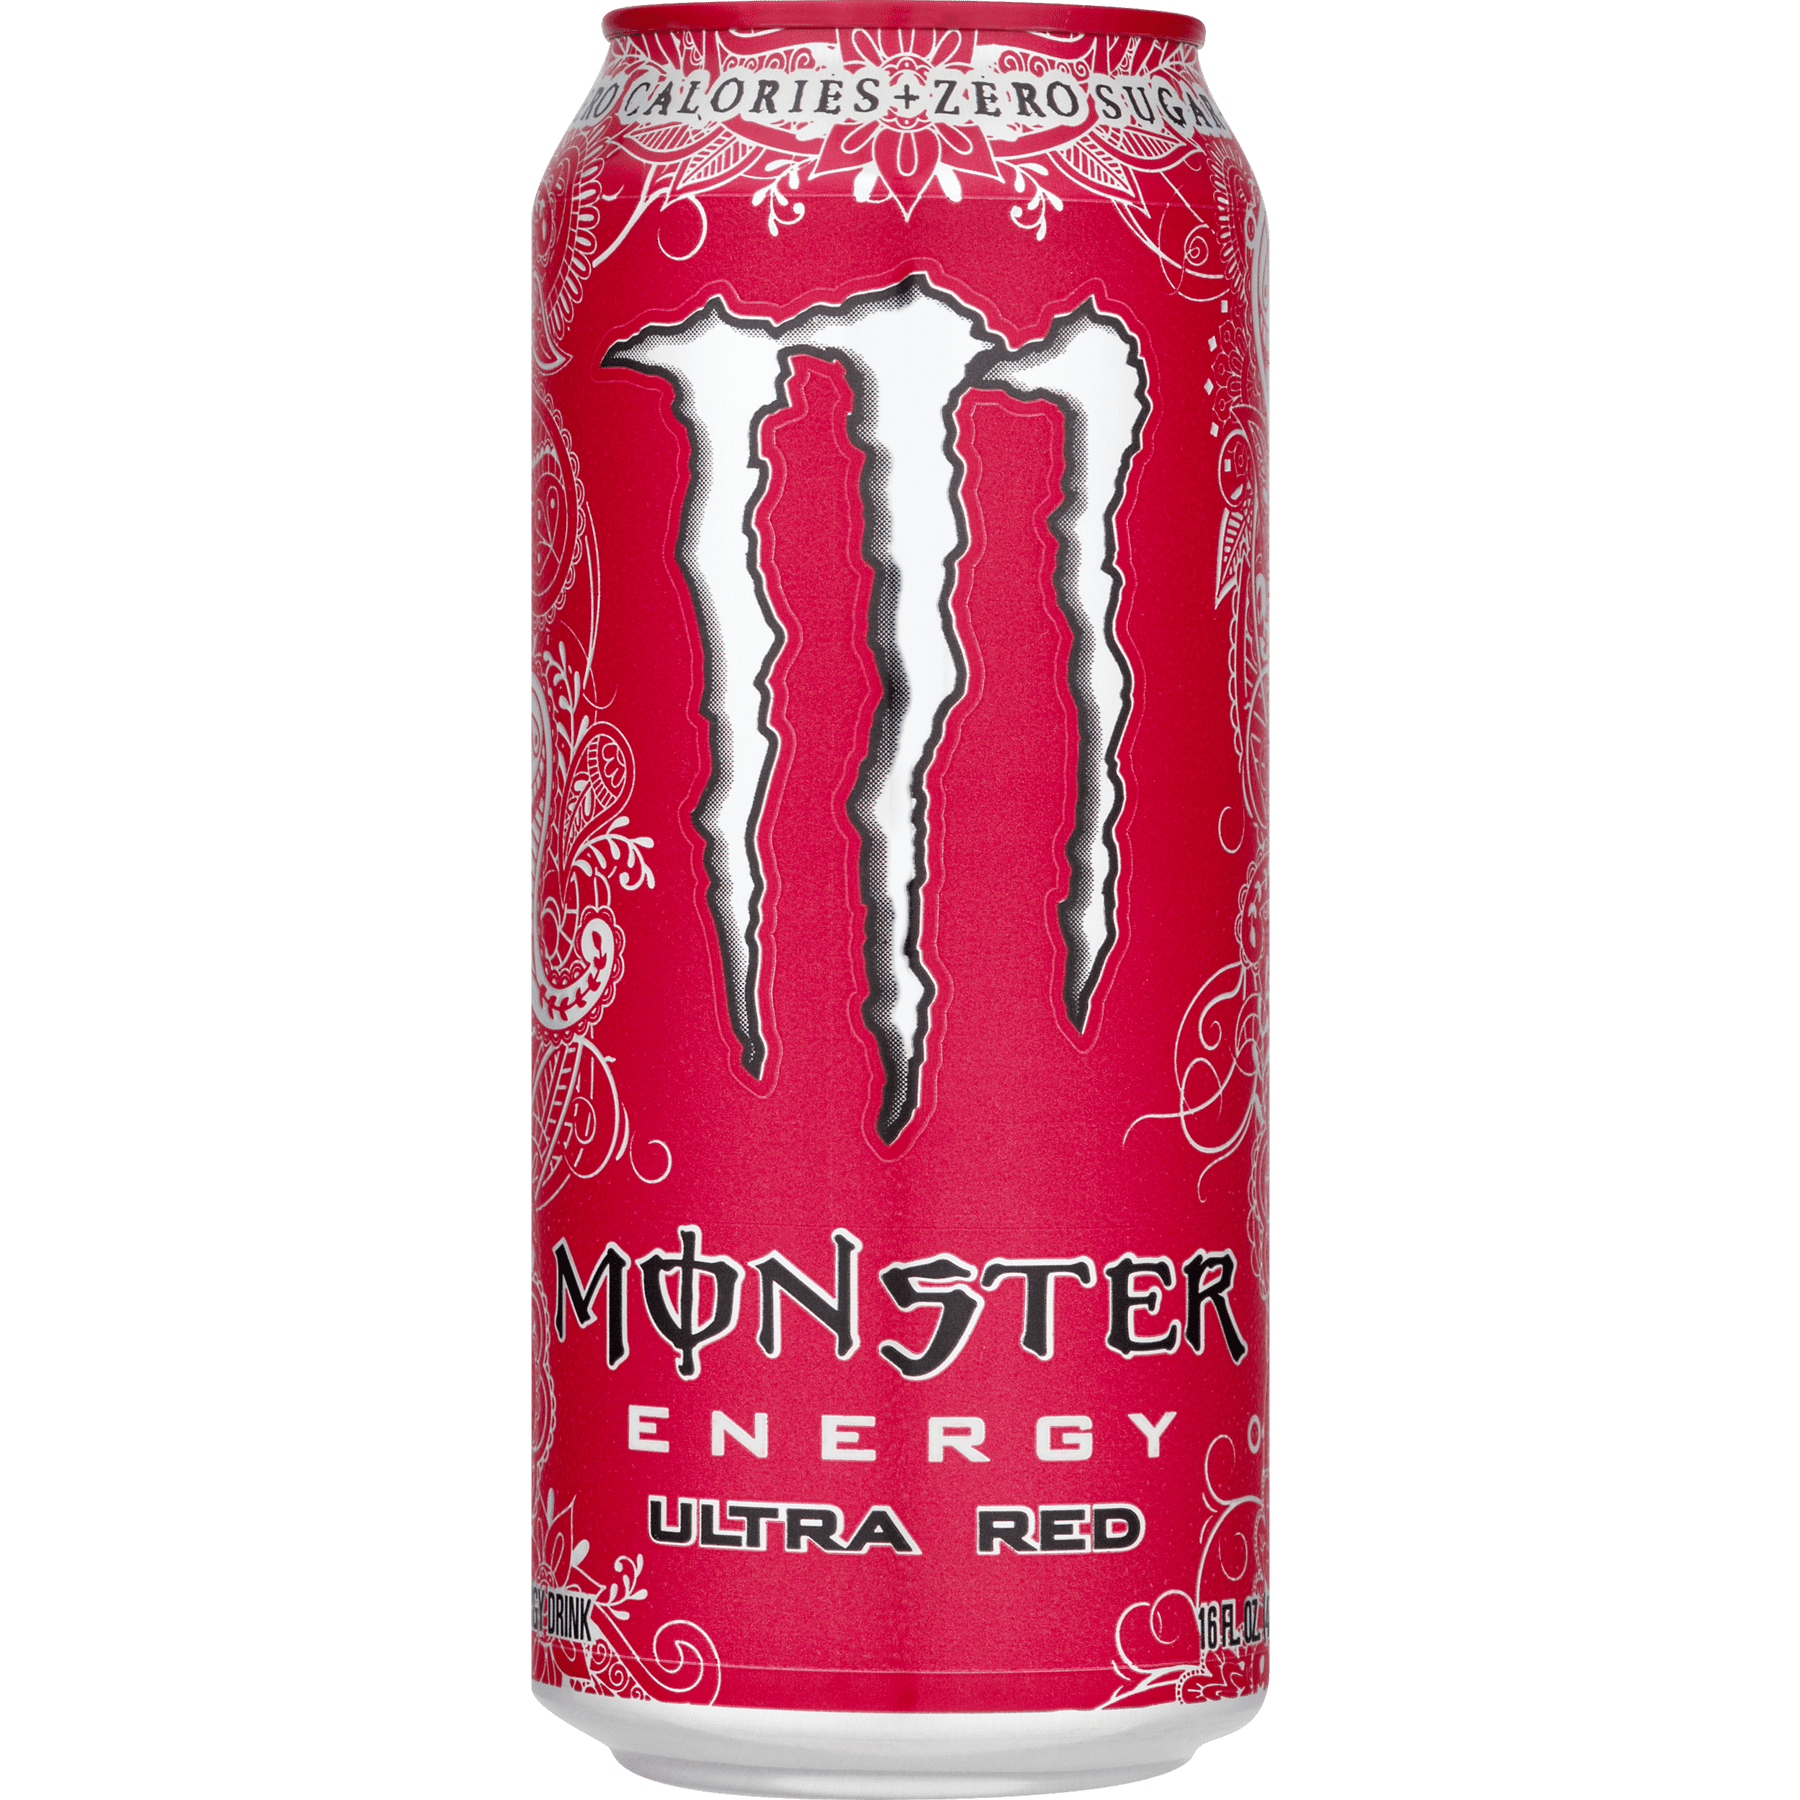 Энергетик Monster Zero Ultra 500ml. Monster Energy Zero Ultra Sugar. Монстр Энерджи ультра ред. Monster Energy 500 ml (ультра Вайт). Хай напиток